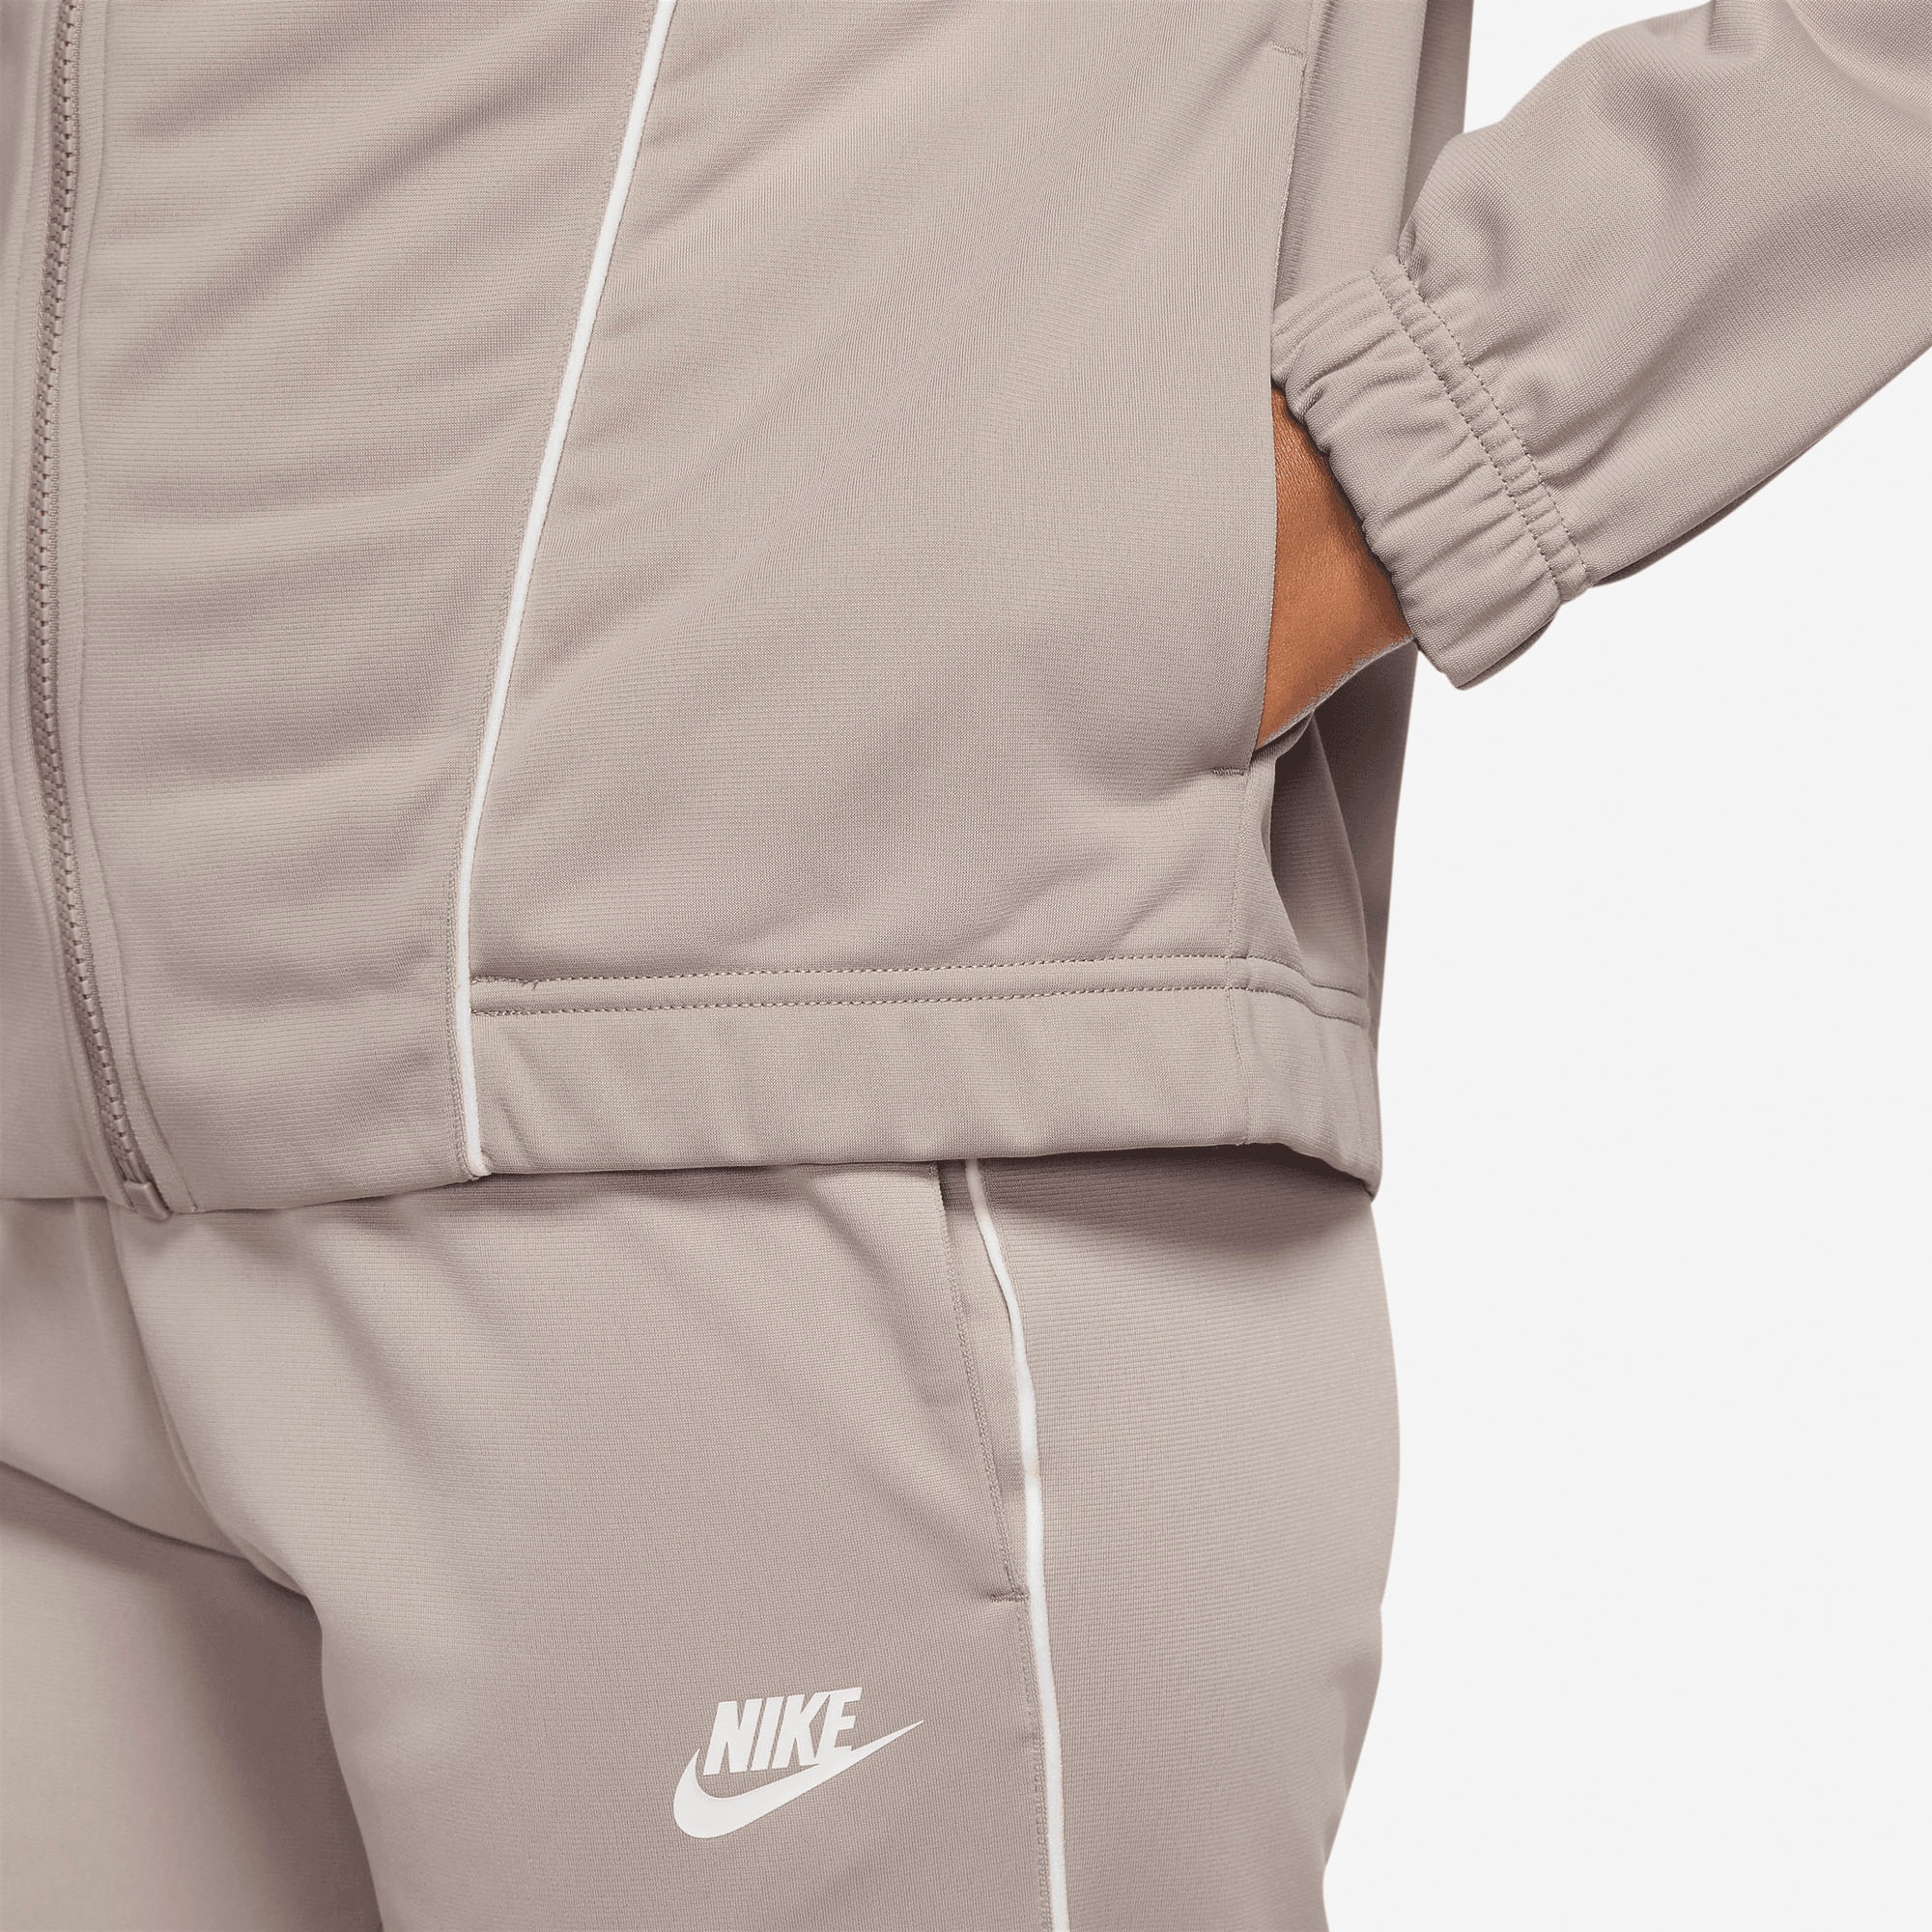 Nike Sportswear Trainingsanzug »Women's Fitted Track Suit«, (Set, 2 tlg.)  auf Rechnung | BAUR